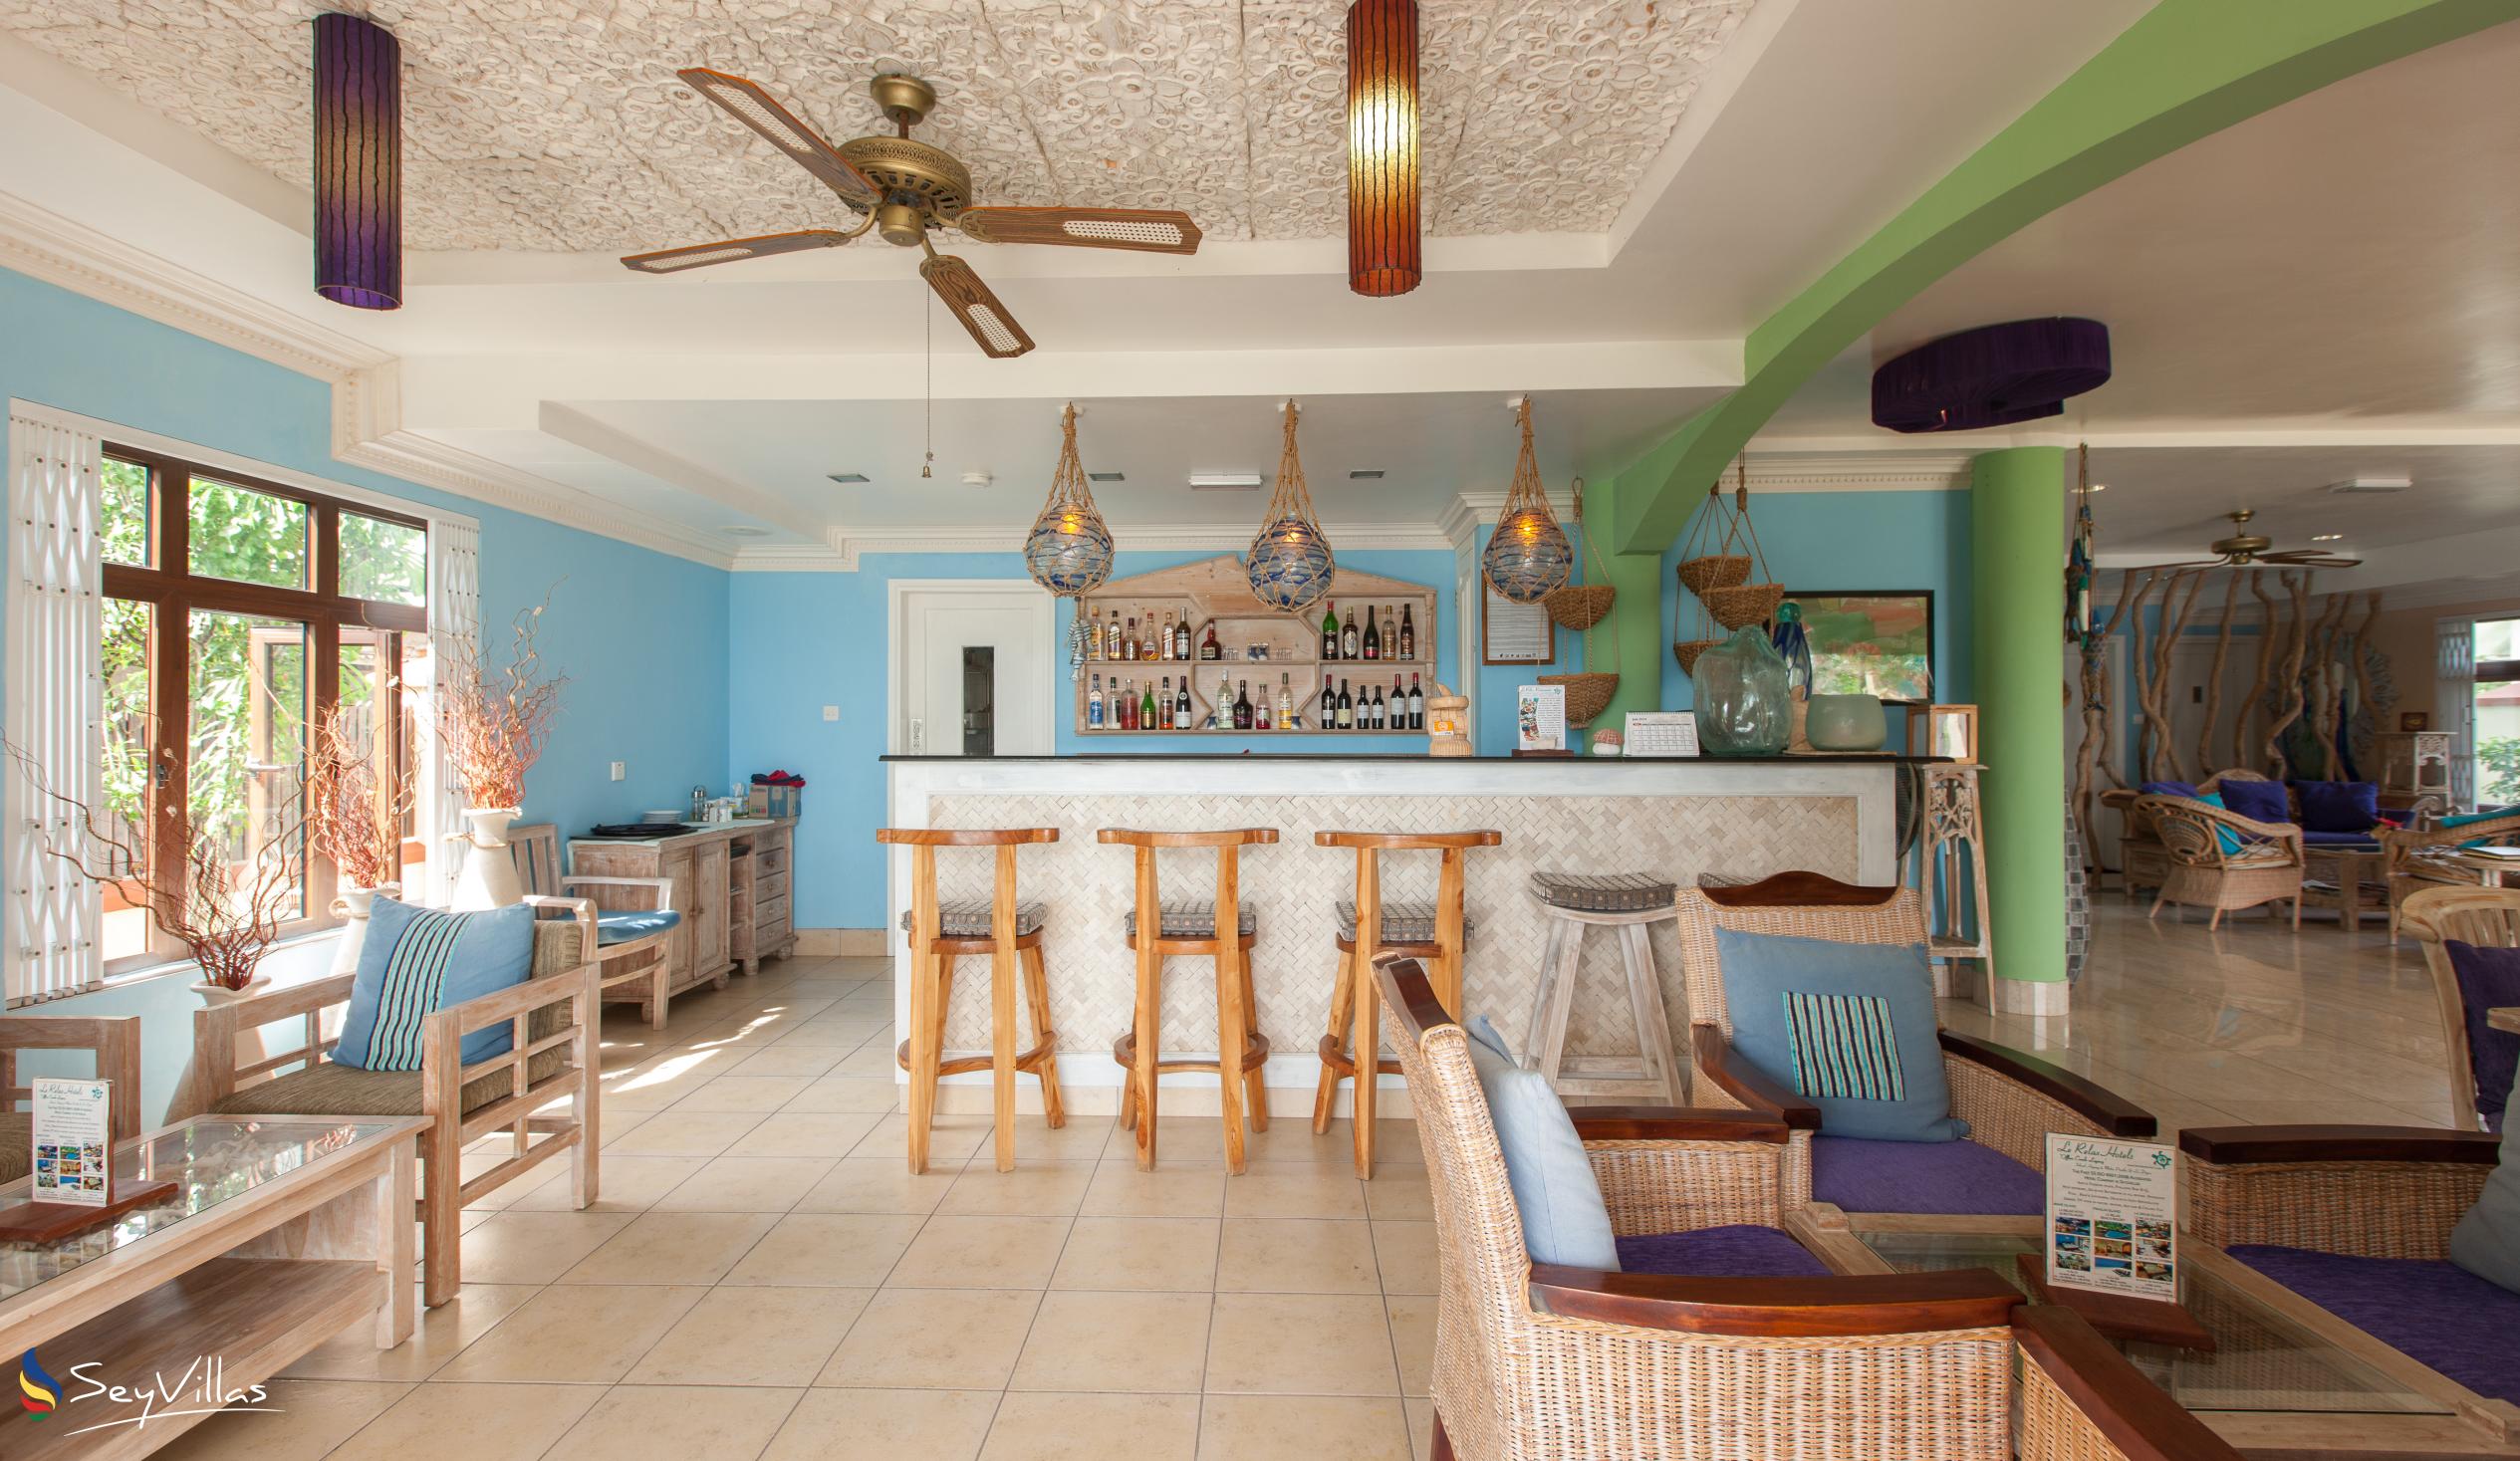 Photo 7: Le Relax Beach House - Indoor area - La Digue (Seychelles)